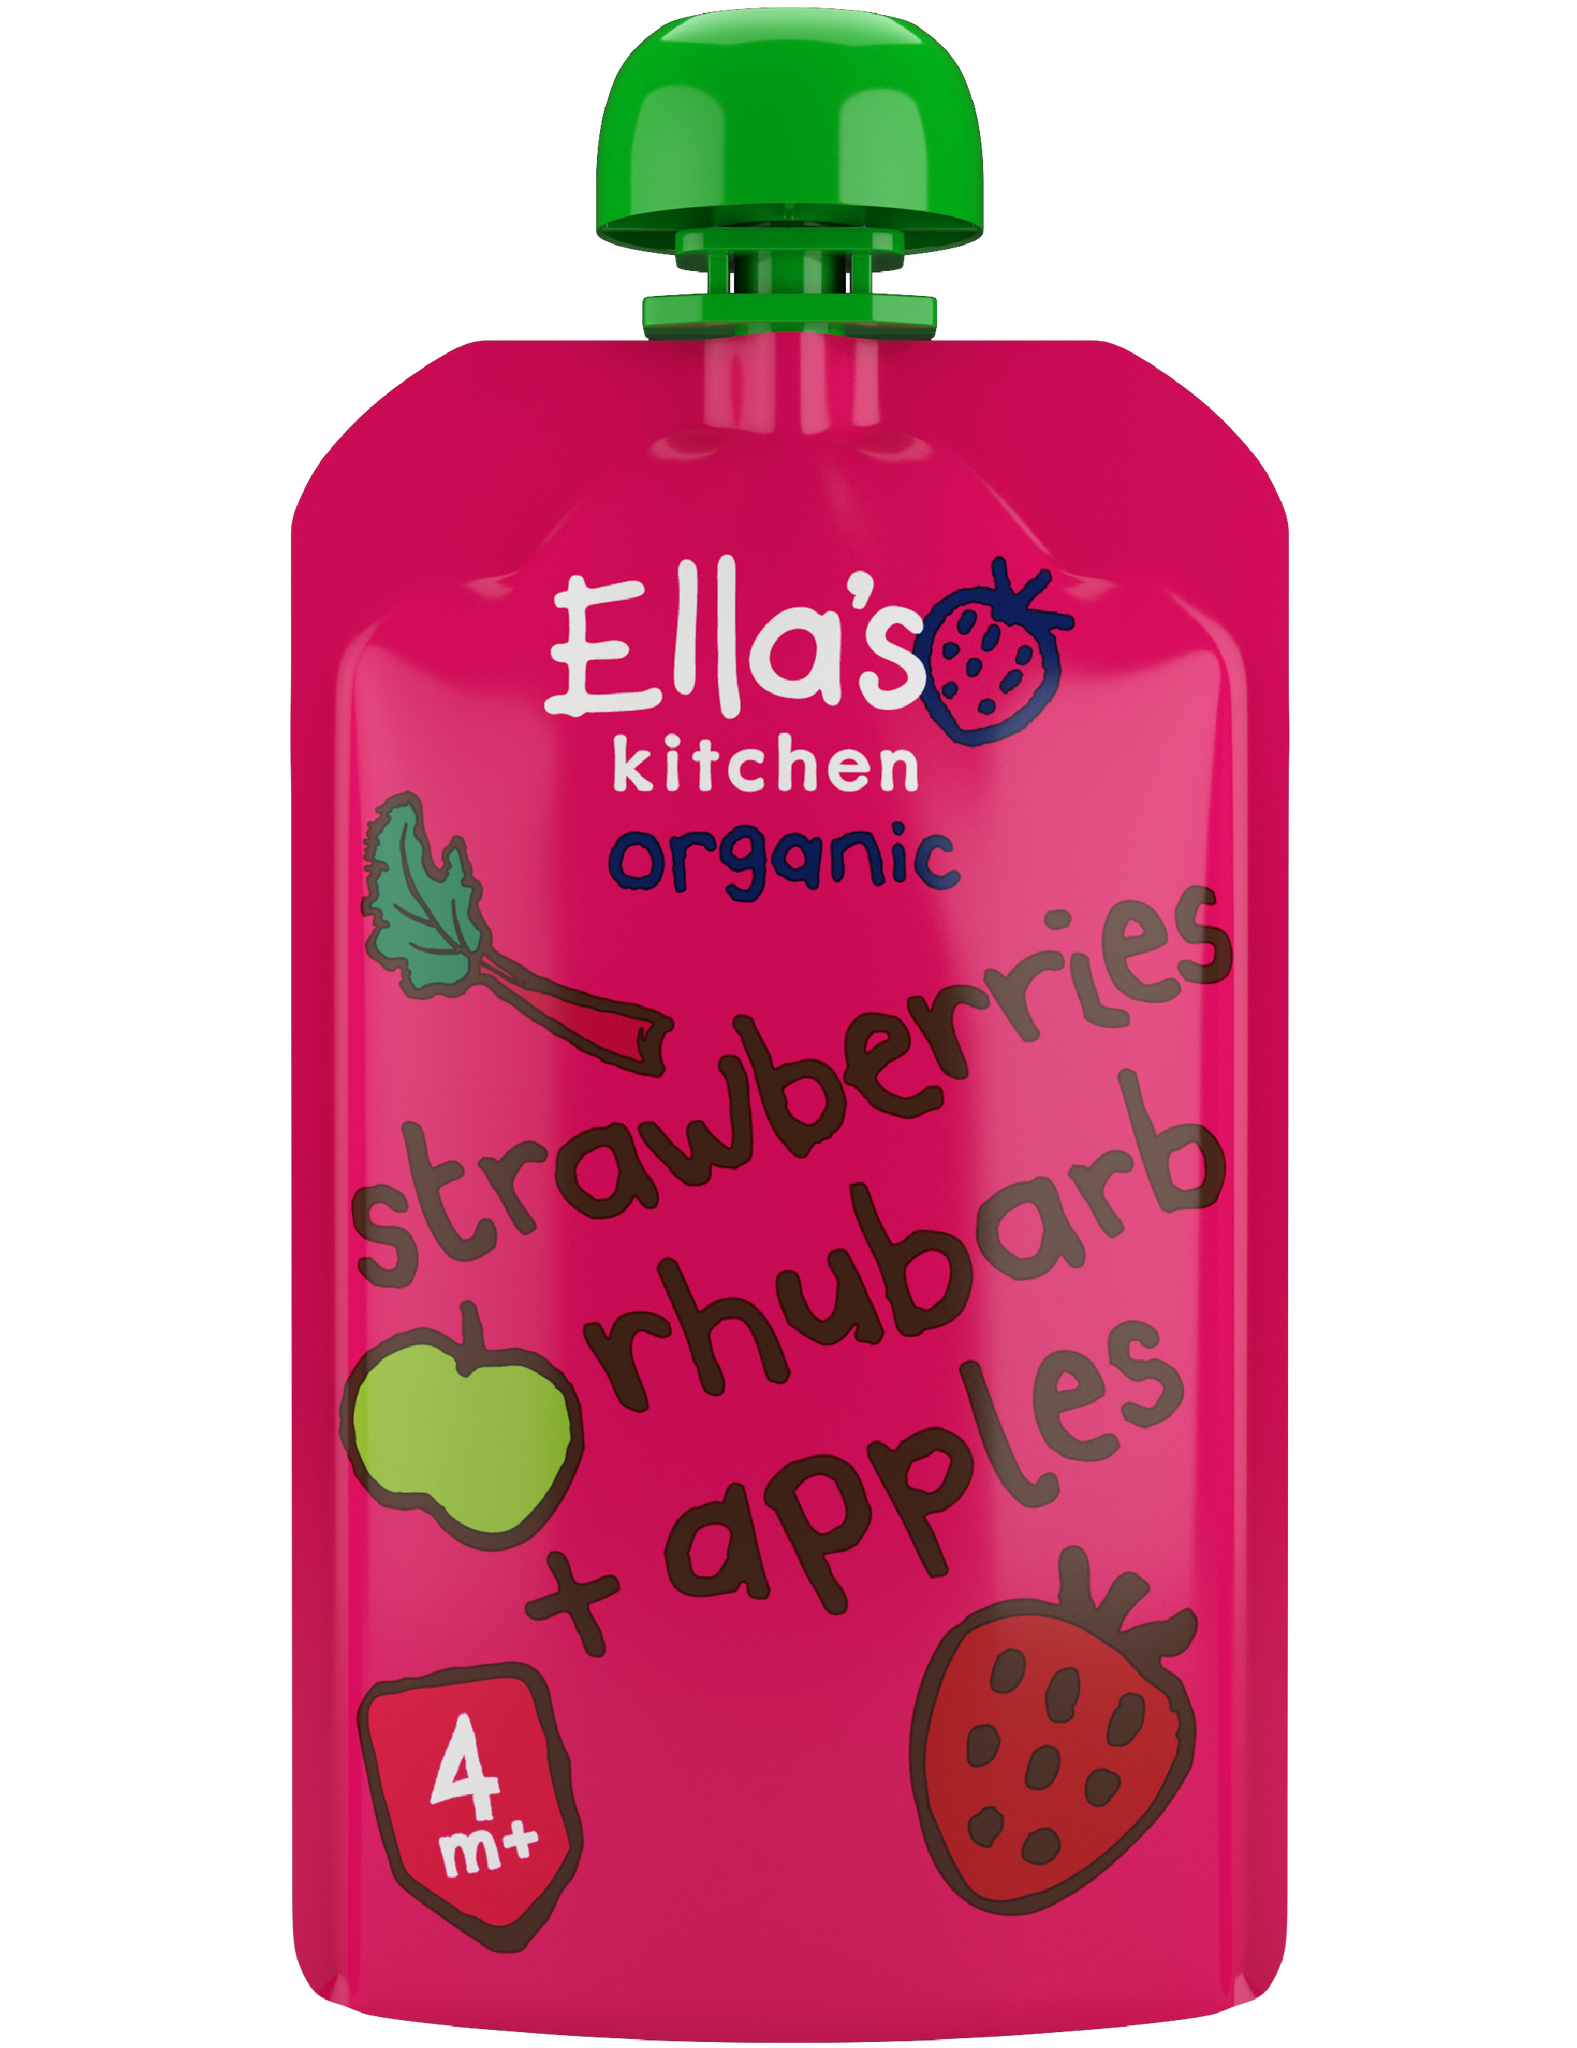 strawberries, rhubarb + apples - 7 x 120 g